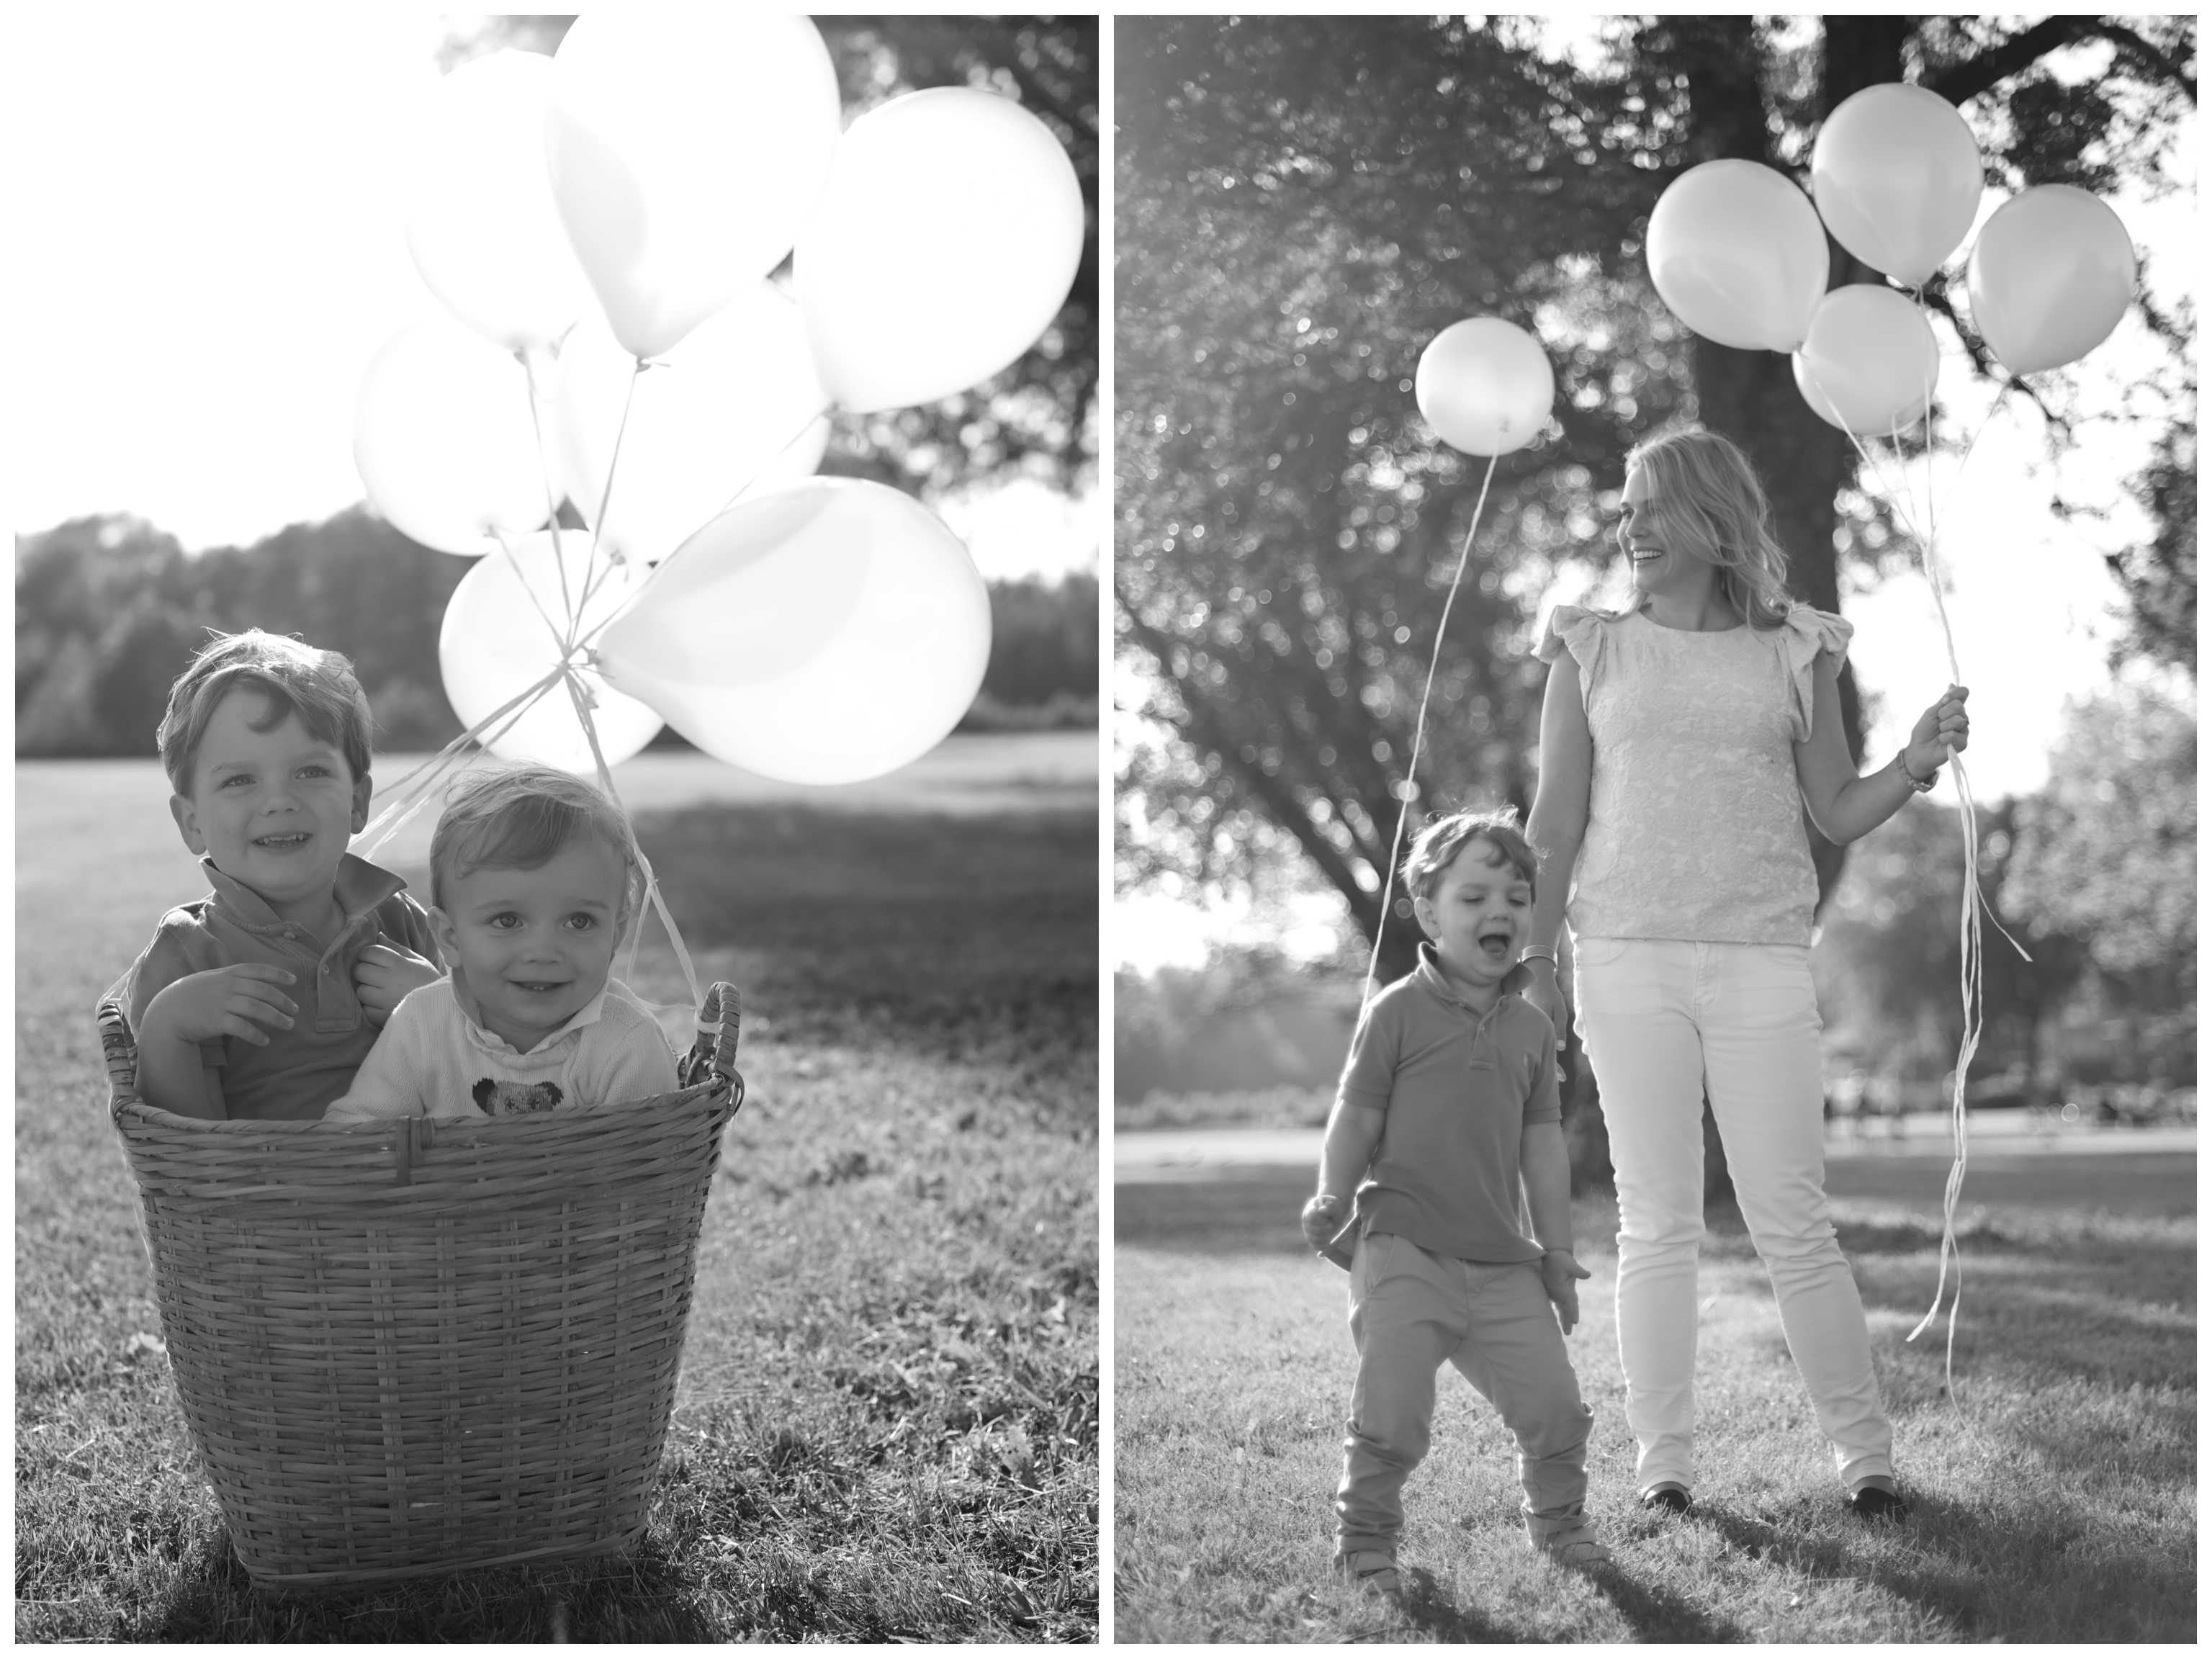 Familjefotografering med ballonger Barnfotograf i Stockholm